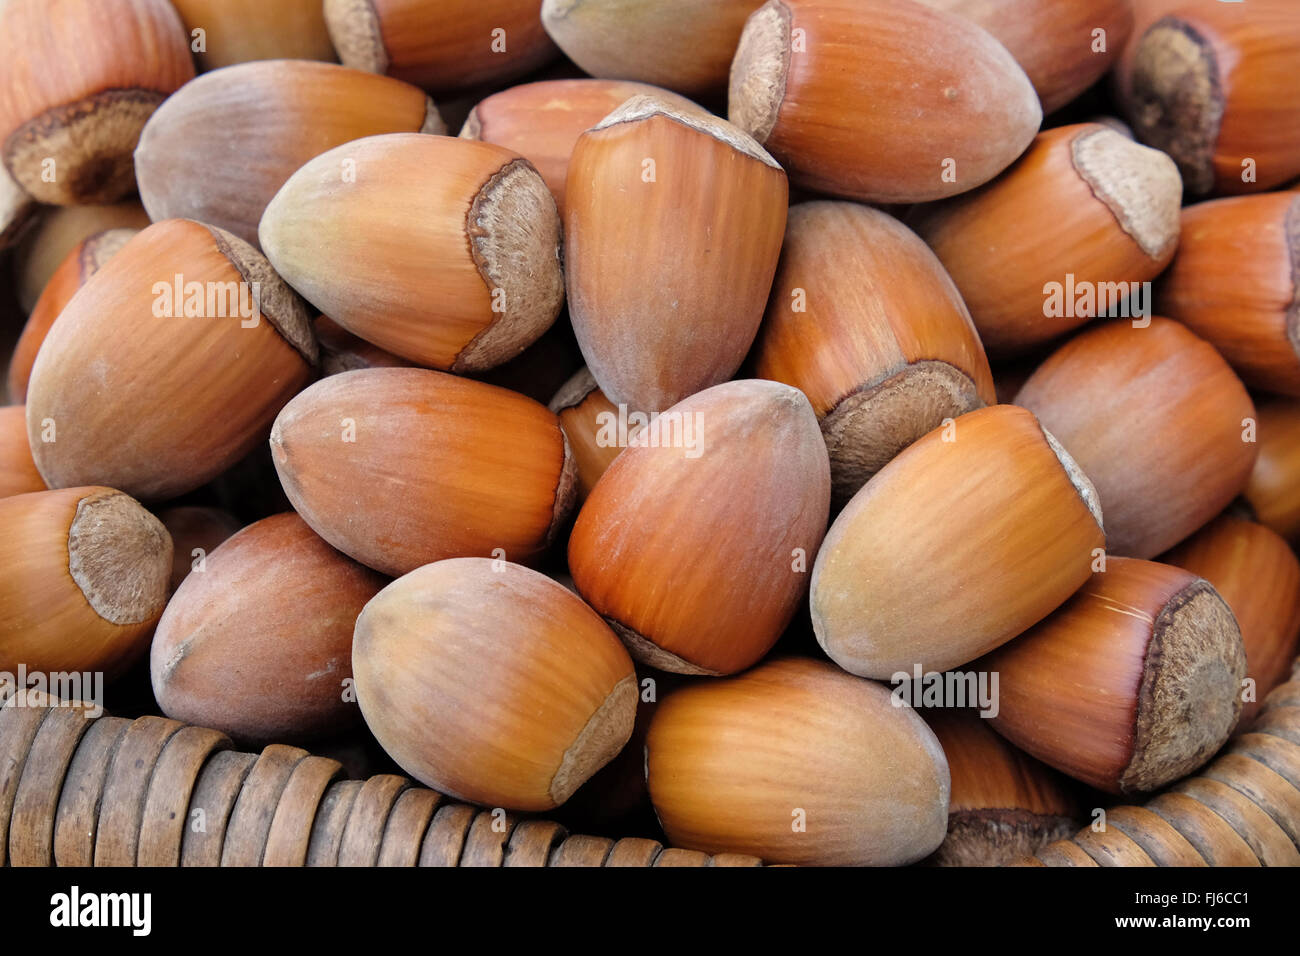 hazelnut (Corylus avellana 'Gunslebener Zellernuss', Corylus avellana Gunslebener Zellernuss), hazelnuts of cultivar Gunslebener Zellernuss Stock Photo